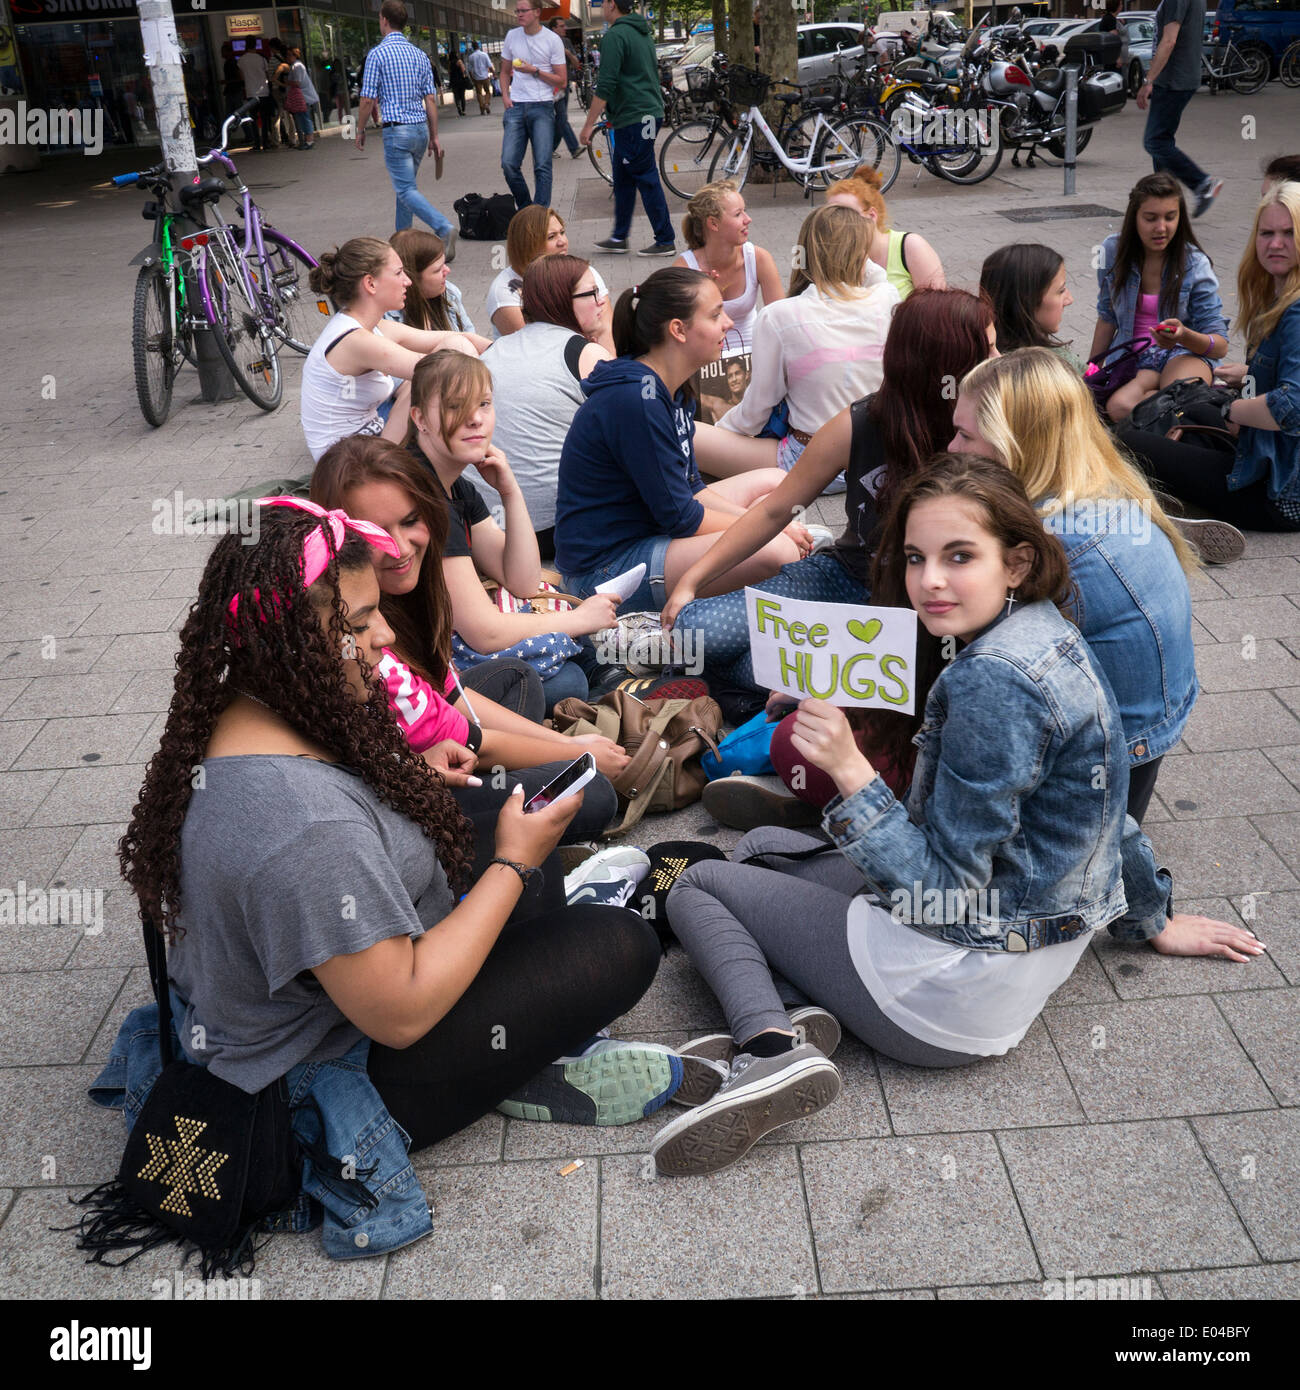 Hamburg - girls sit in the street offering free hugs Stock Photo